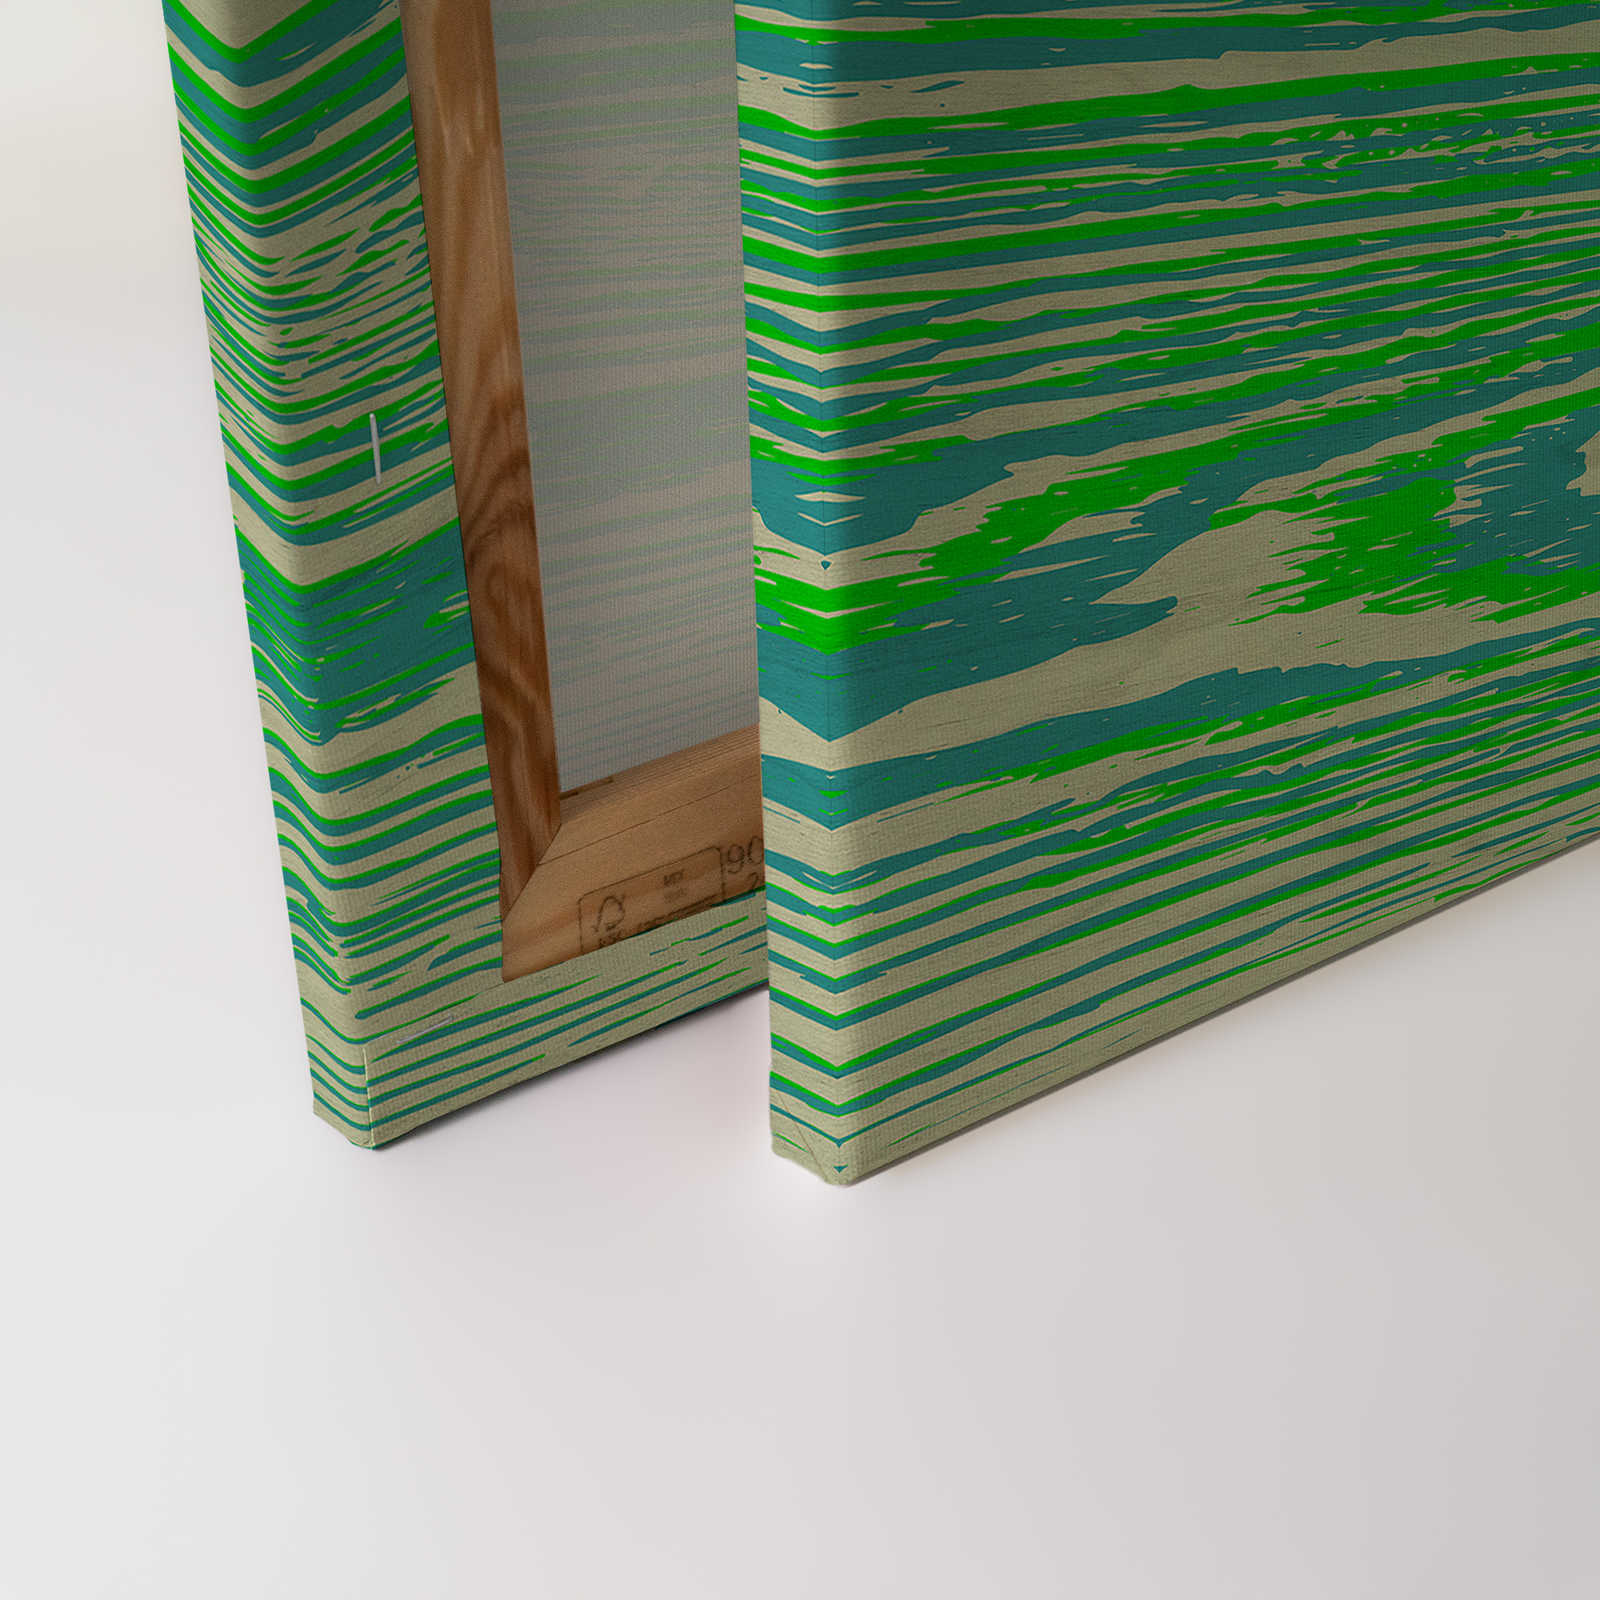             Bounty 1 - Toile vert fluo imitation bois design - 1,20 m x 0,80 m
        